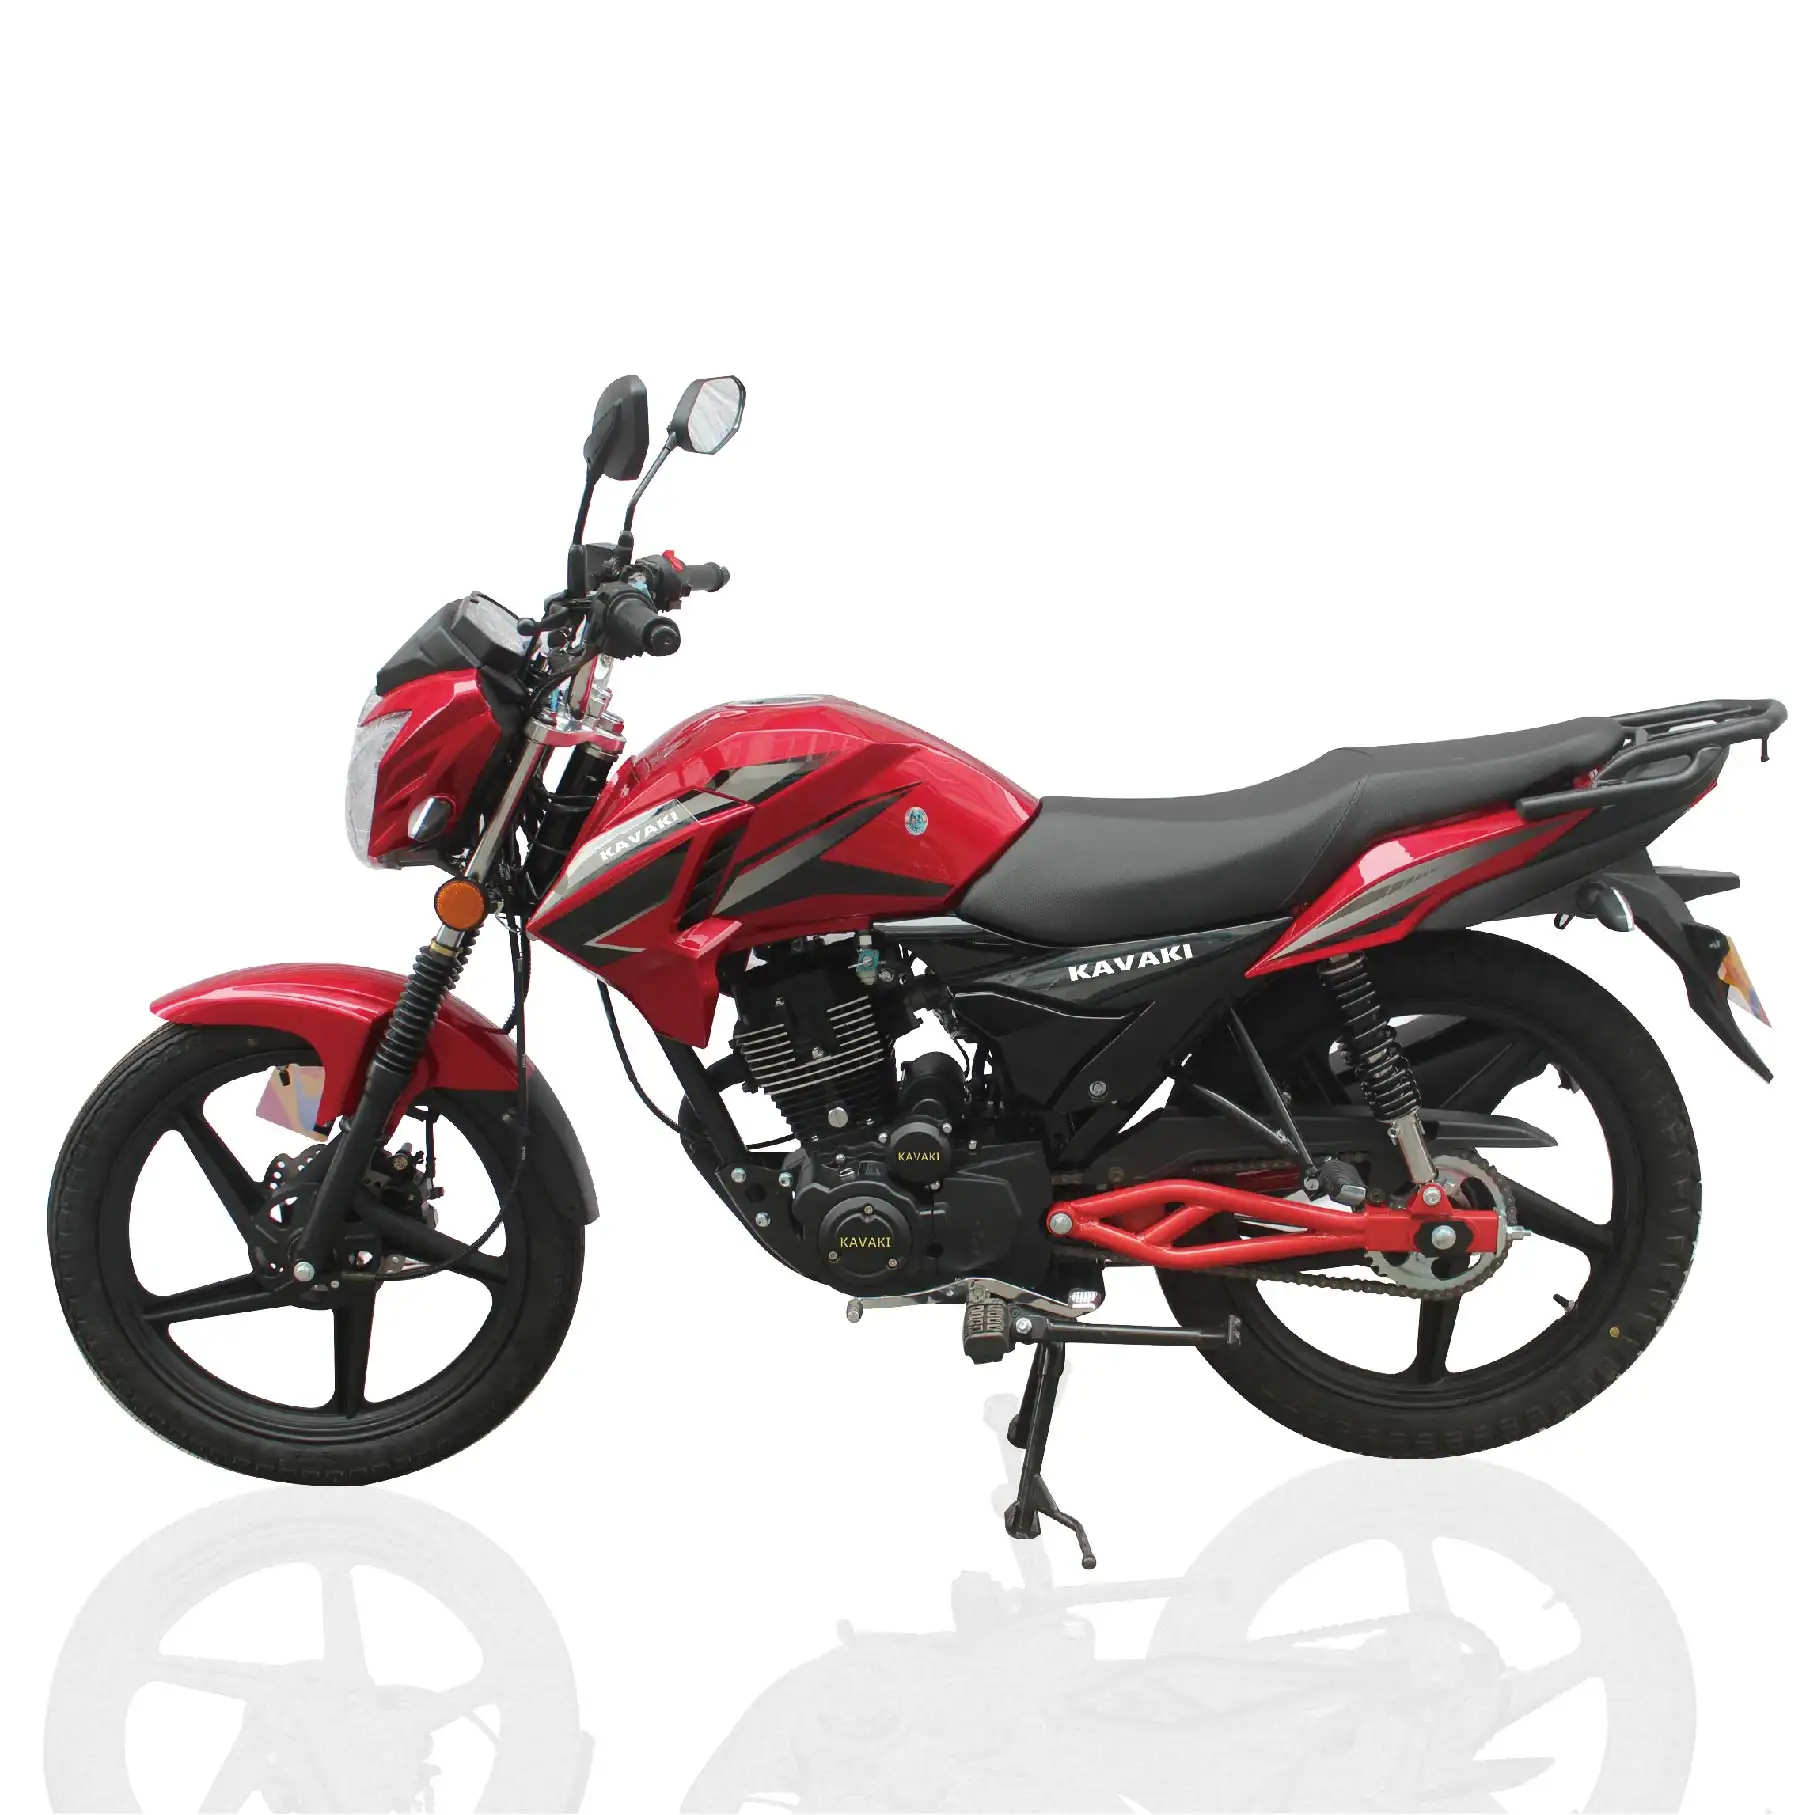 KAVAKI-motor de alta calidad para motocicleta de carreras, 2 ruedas, 50cc, 125cc, 150cc, venta al por mayor